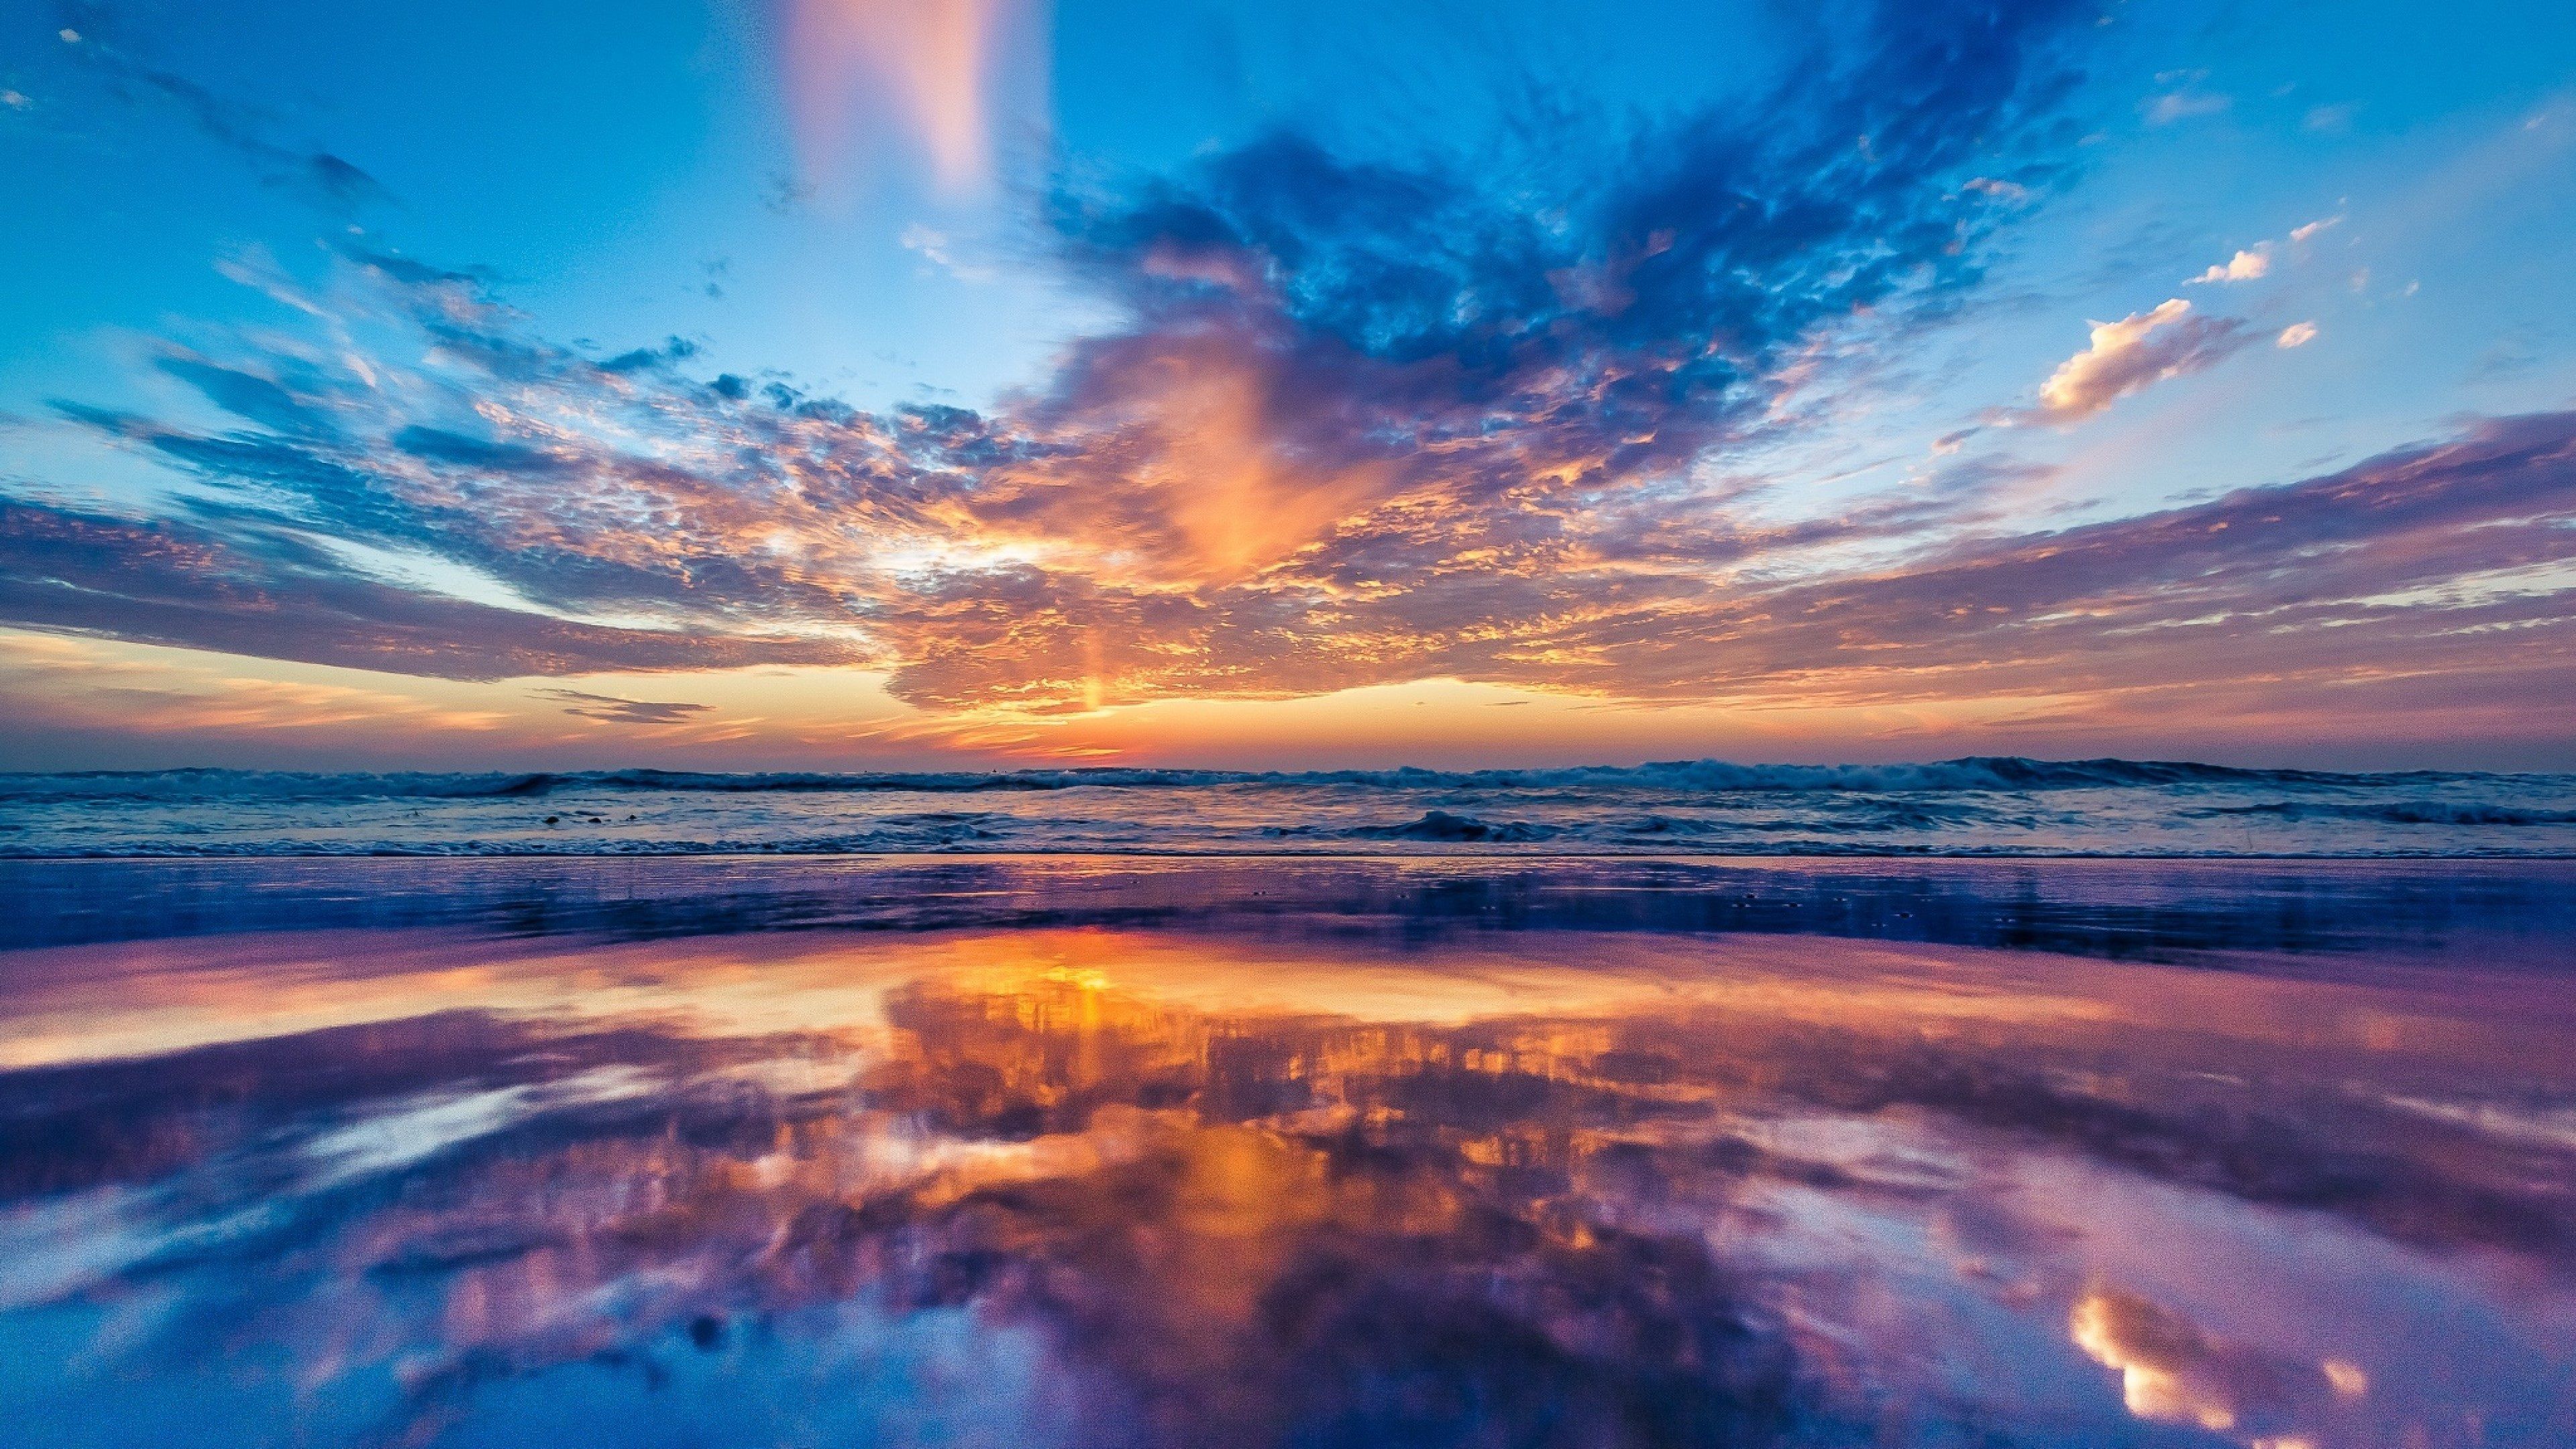 ocean 4k download HD wallpaper for desktop. Sunrise wallpaper, Beach sunset wallpaper, Beach wallpaper